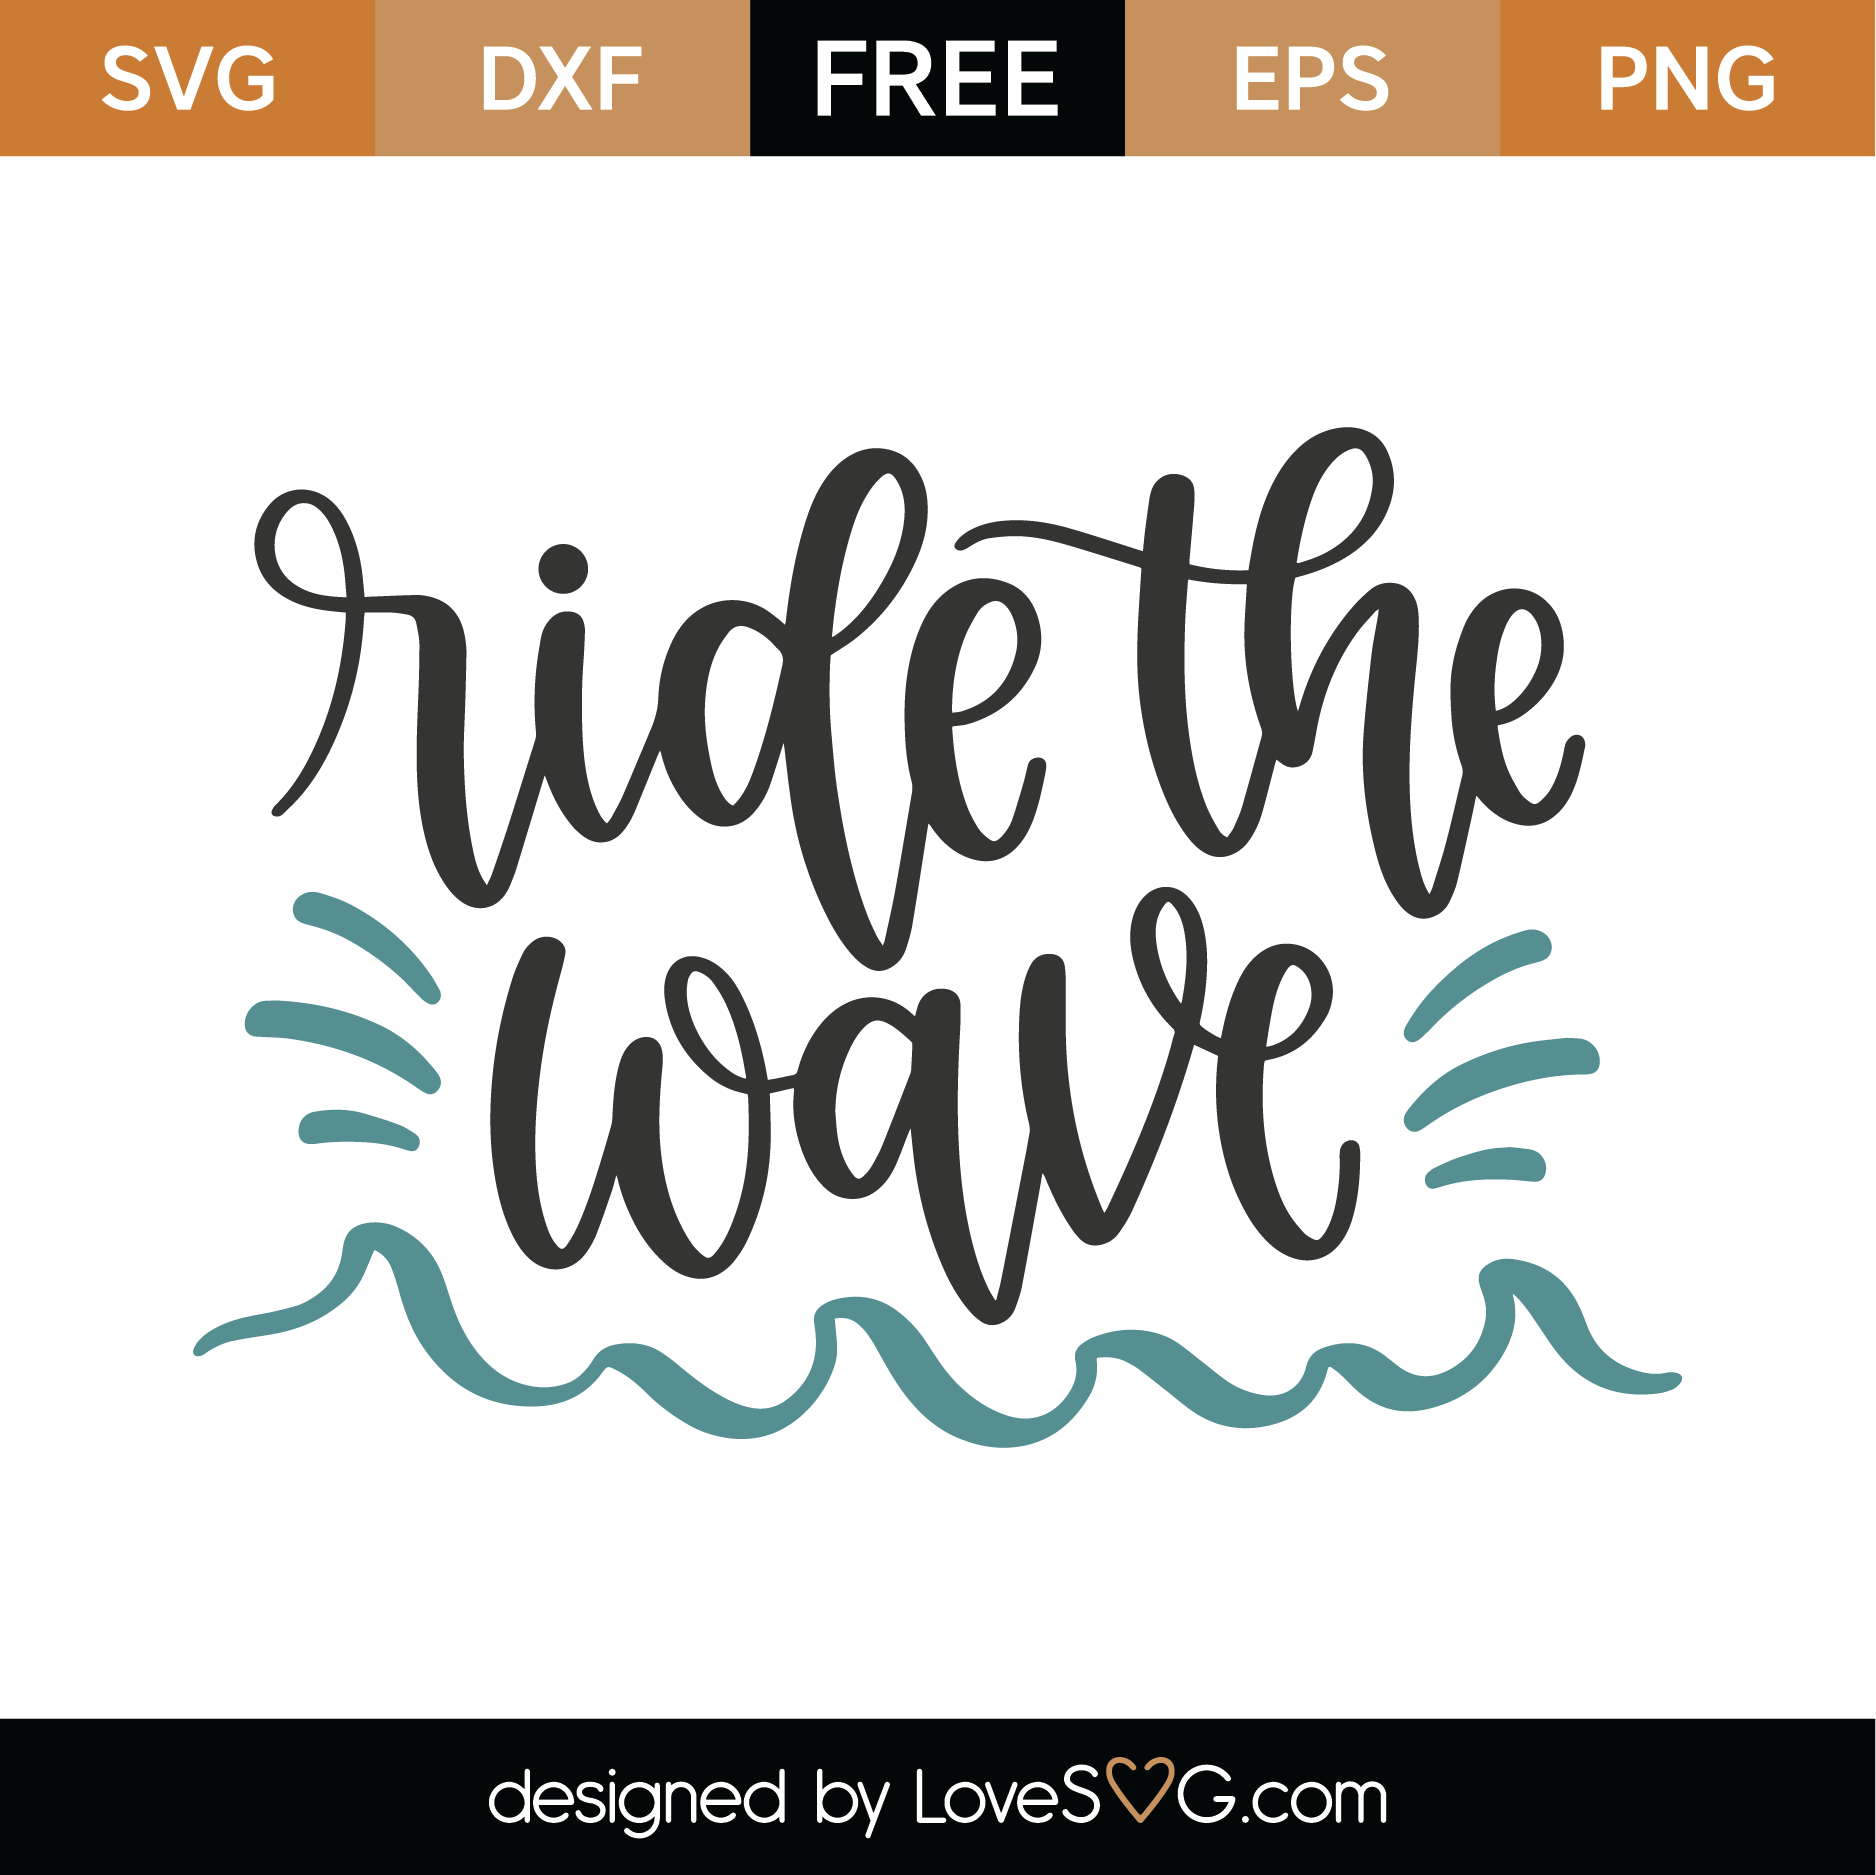 Download Free Ride The Waves SVG Cut File | Lovesvg.com